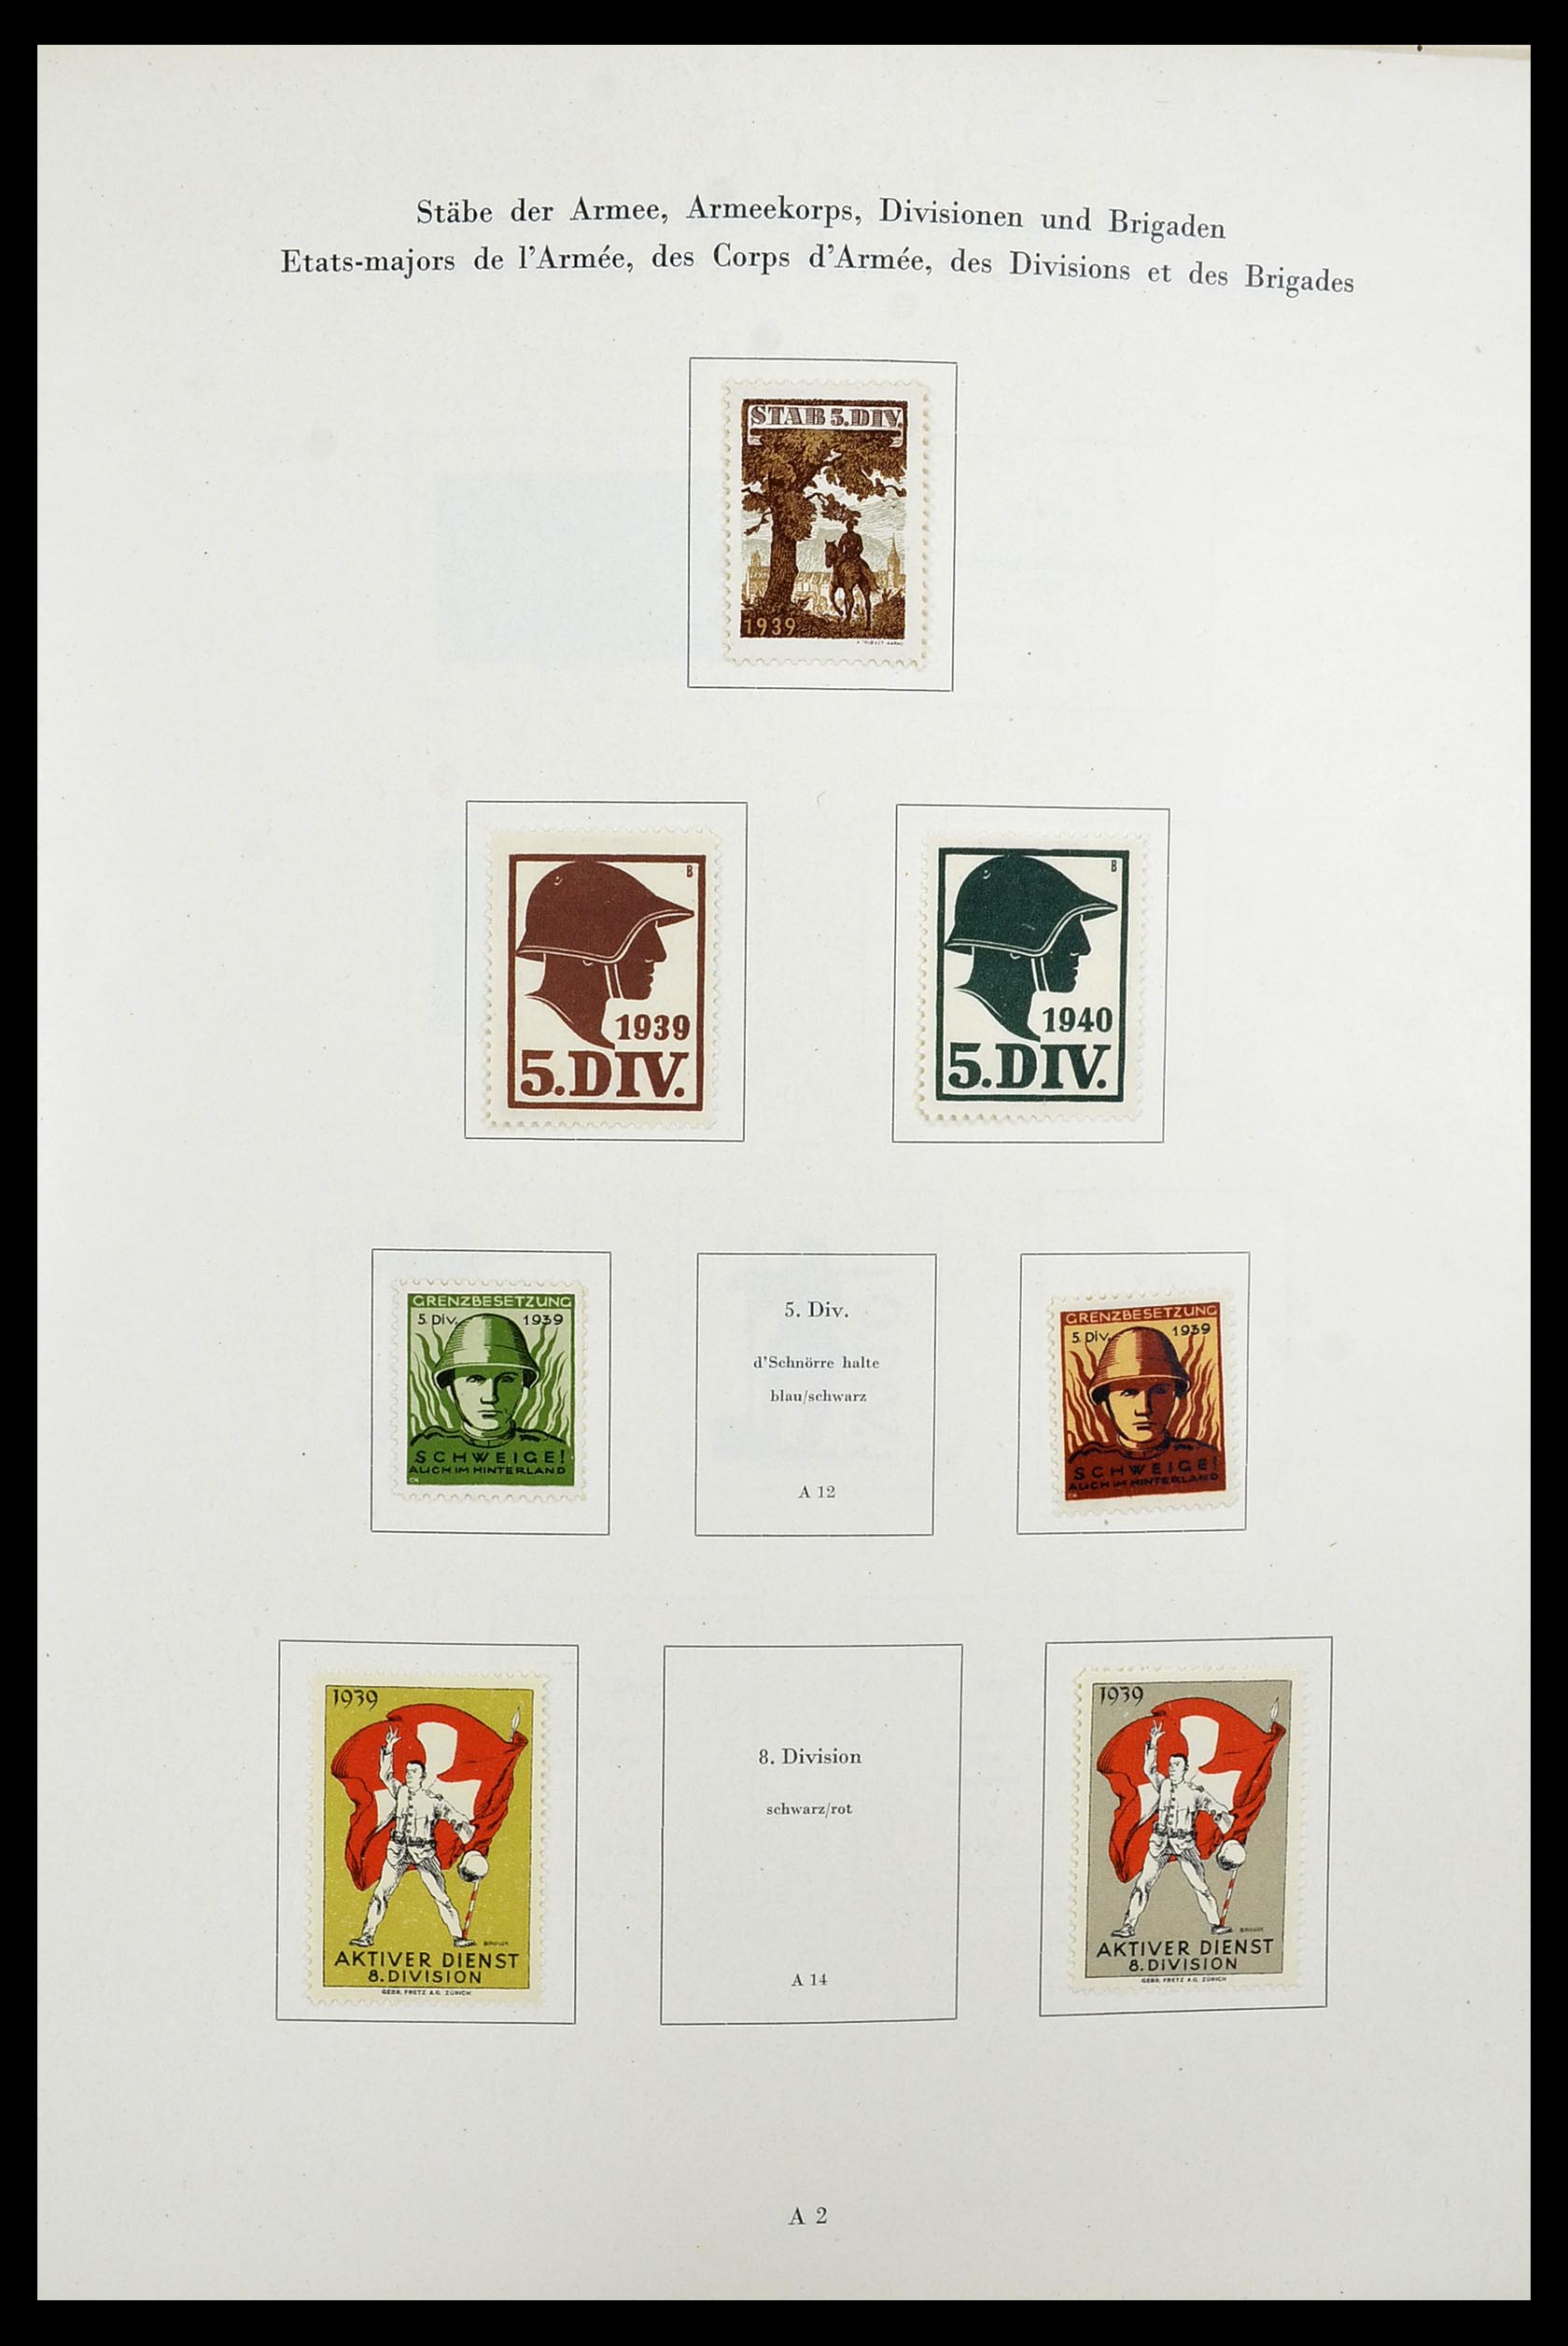 34234 003 - Stamp collection 34234 Switzerland soldier stamps 1939-1945.